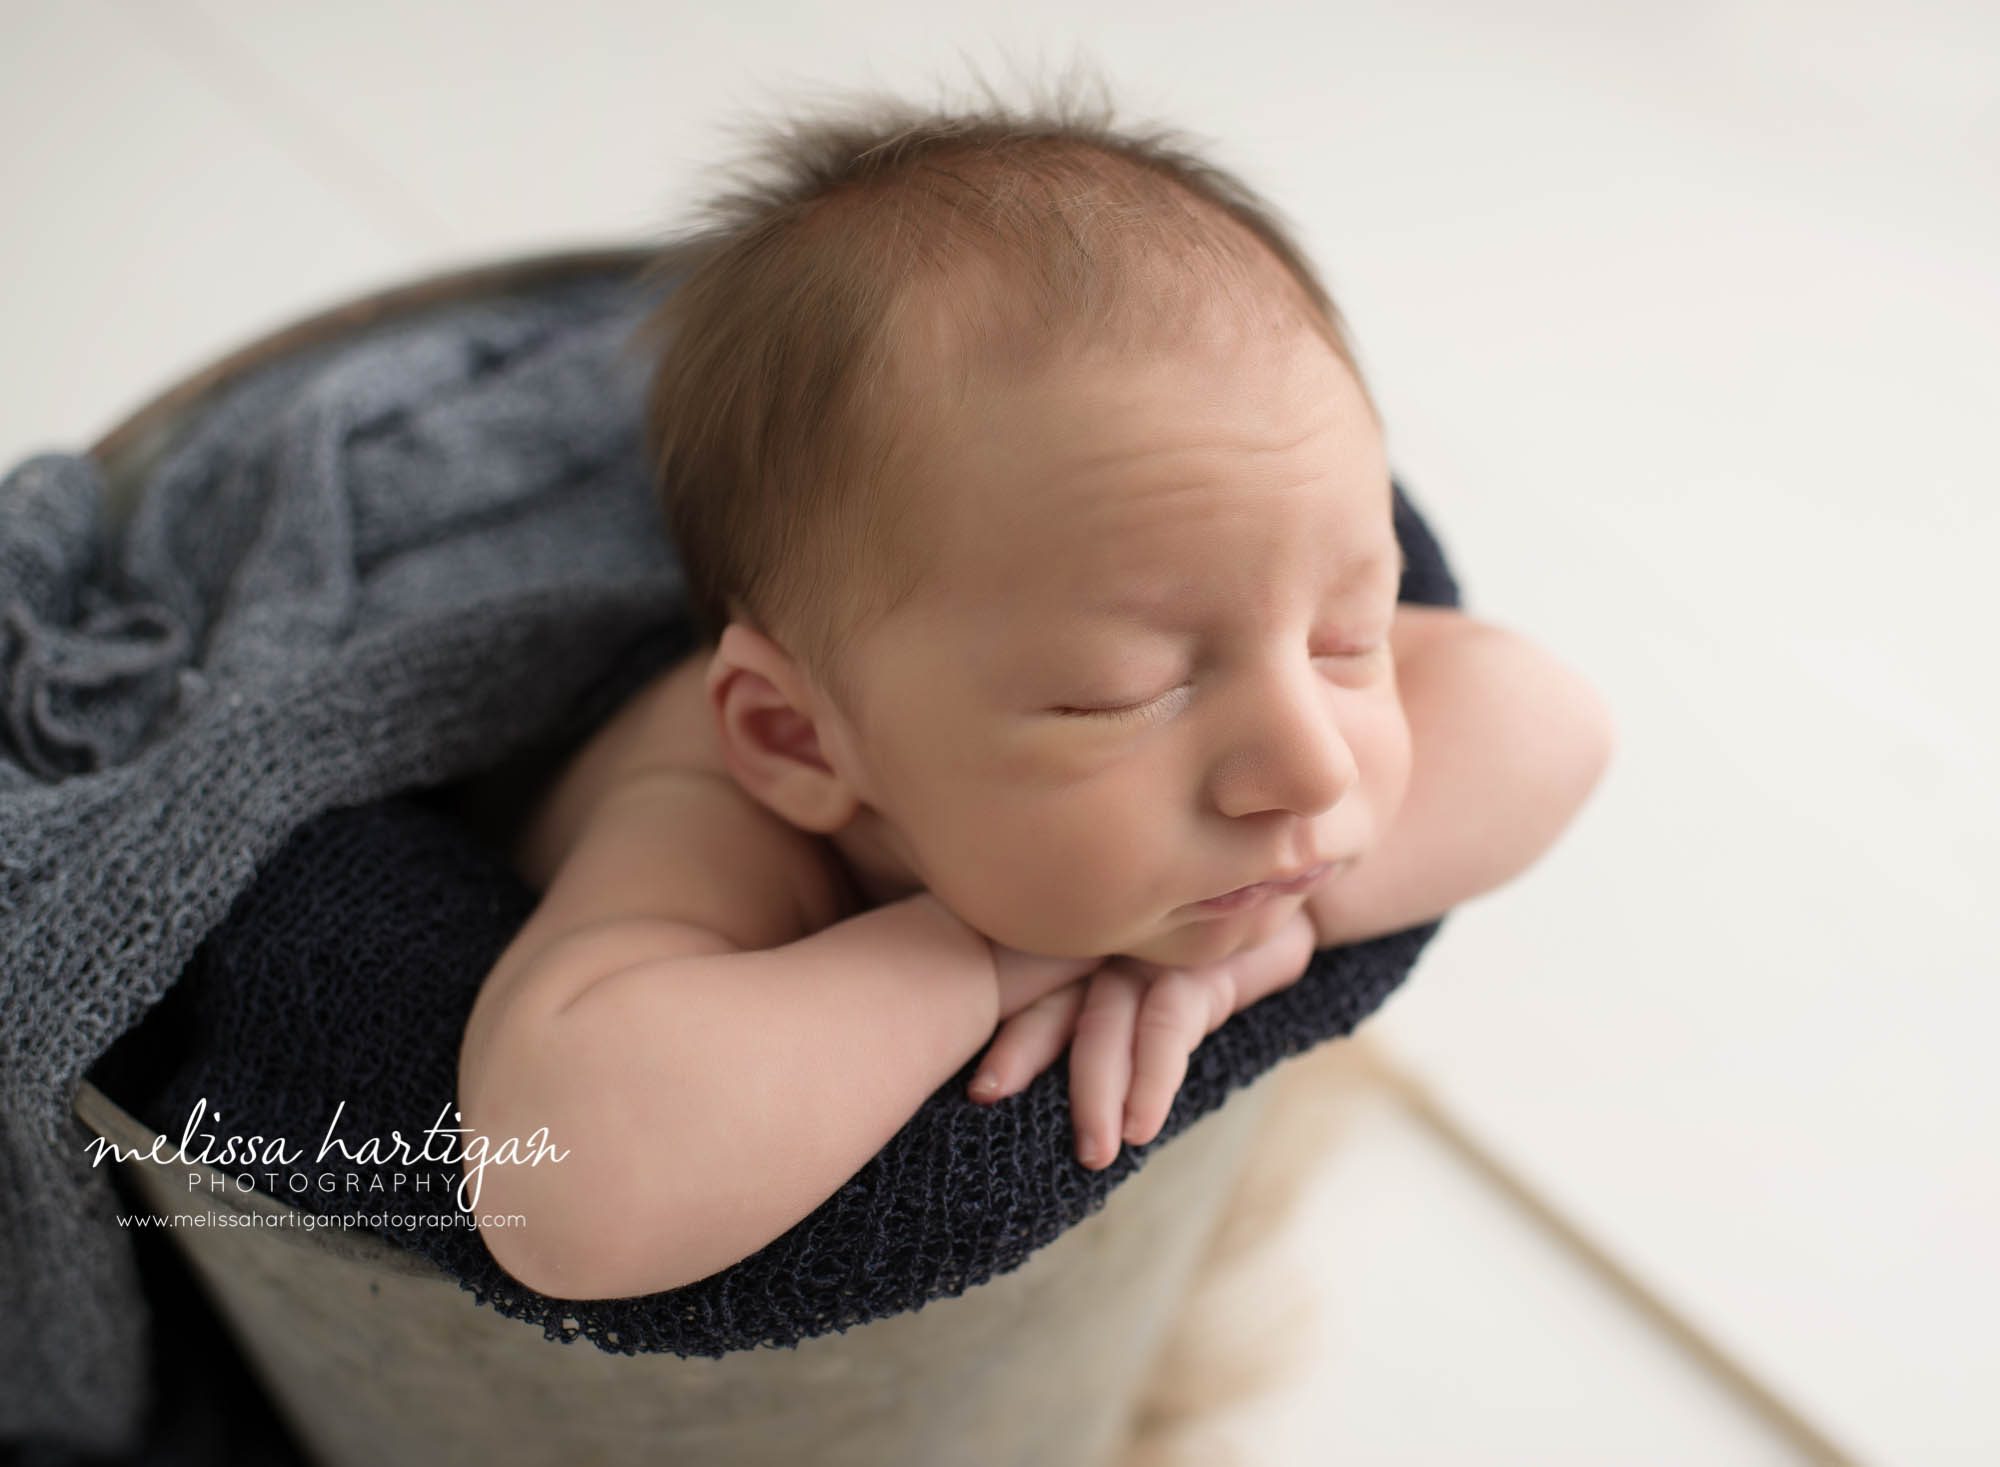 Newborn Photographer Connecticut newborn pose baby sleeping in metal bucket with blue blanket